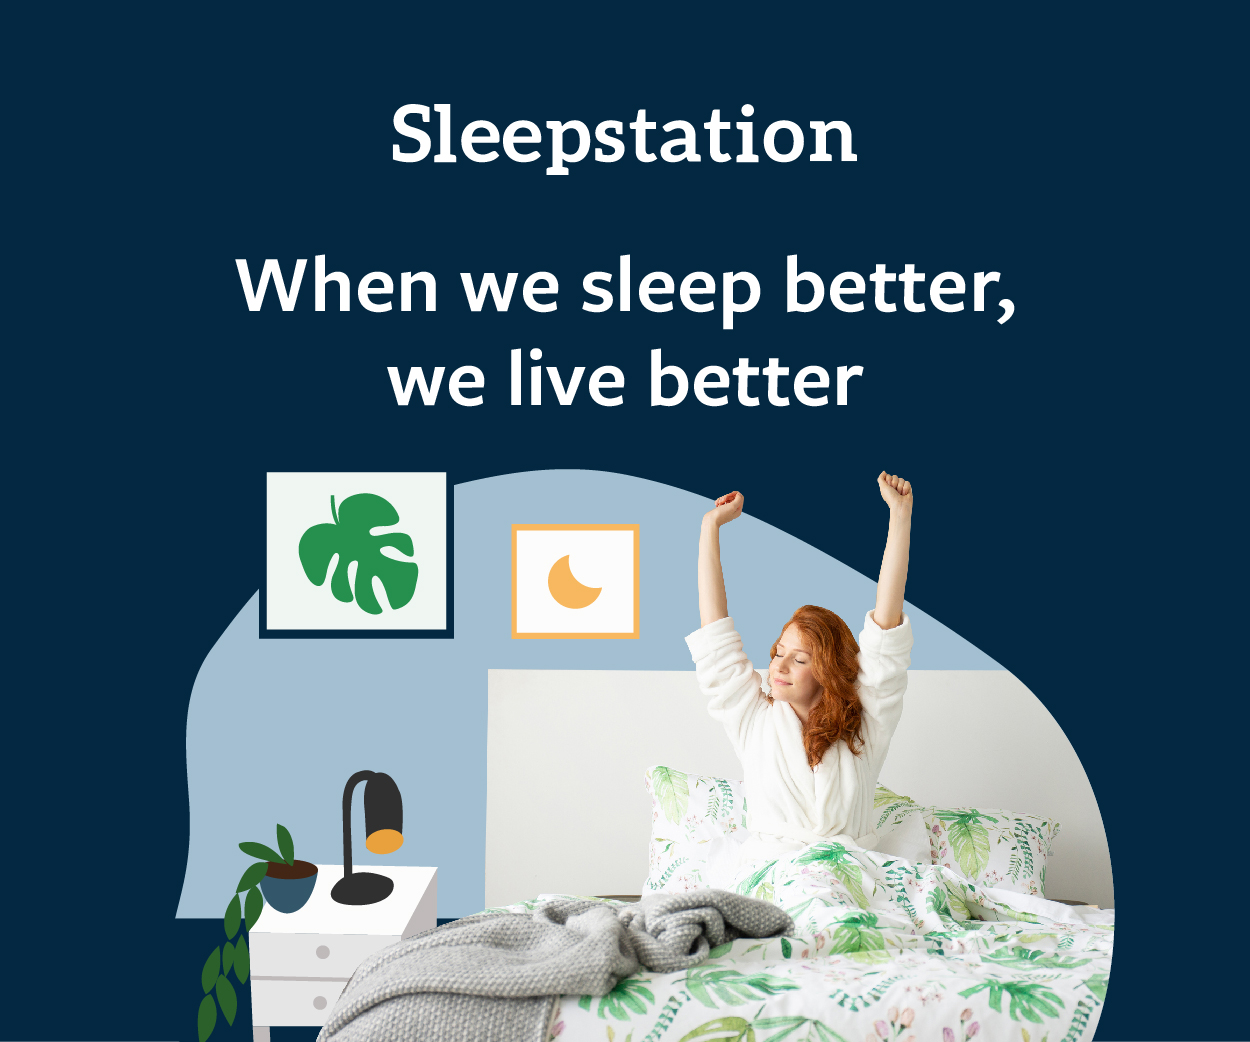 When we sleep better, we live better. Sleepstation